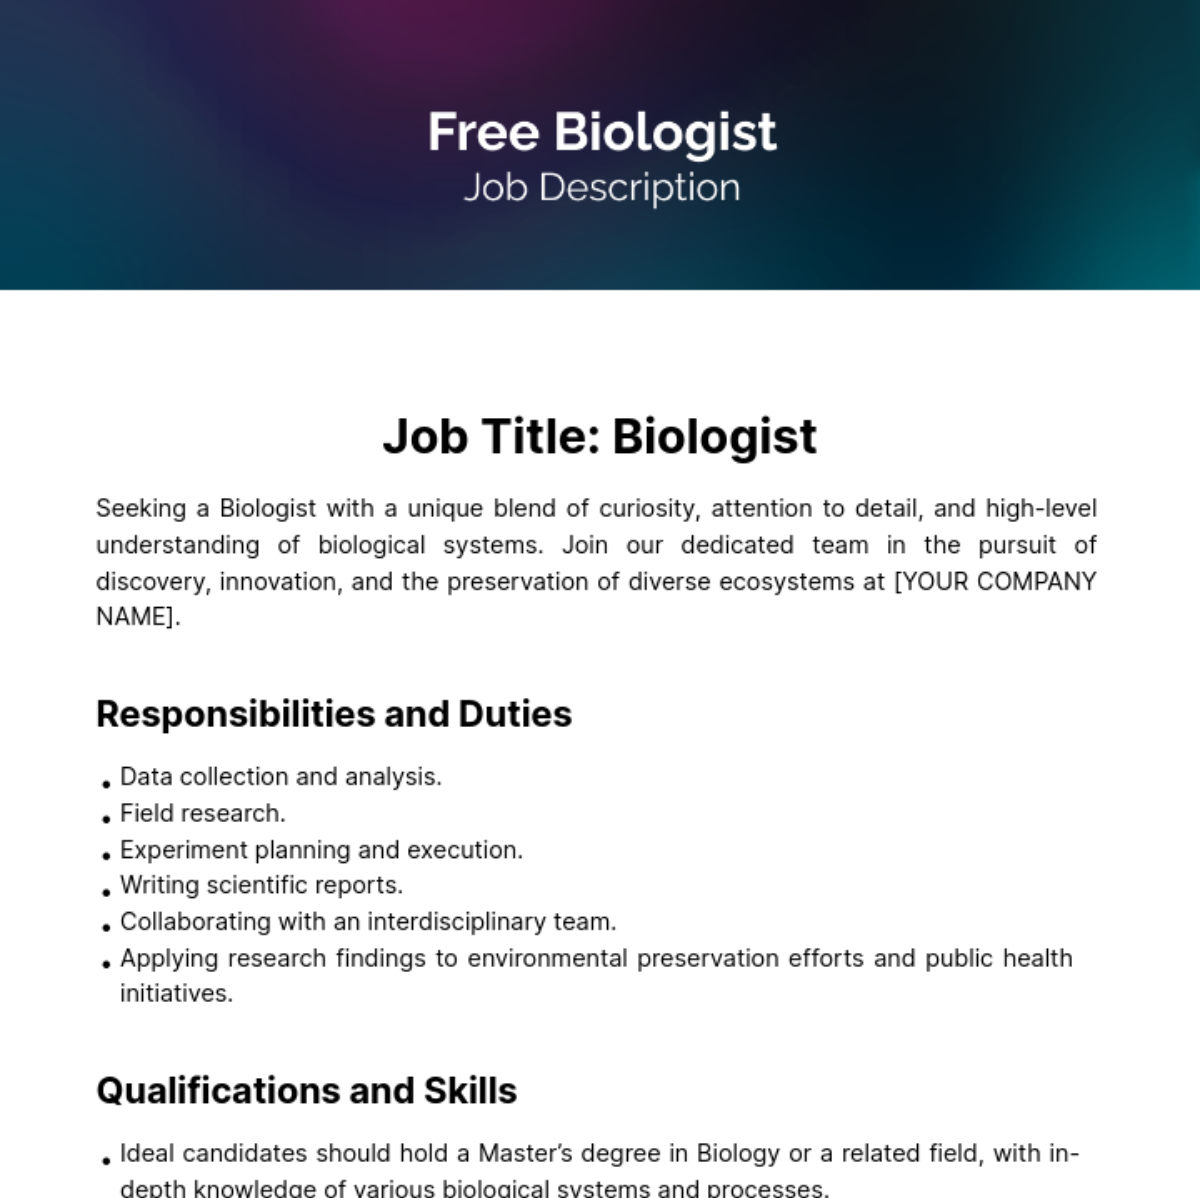 Free Biologist Job Description Template